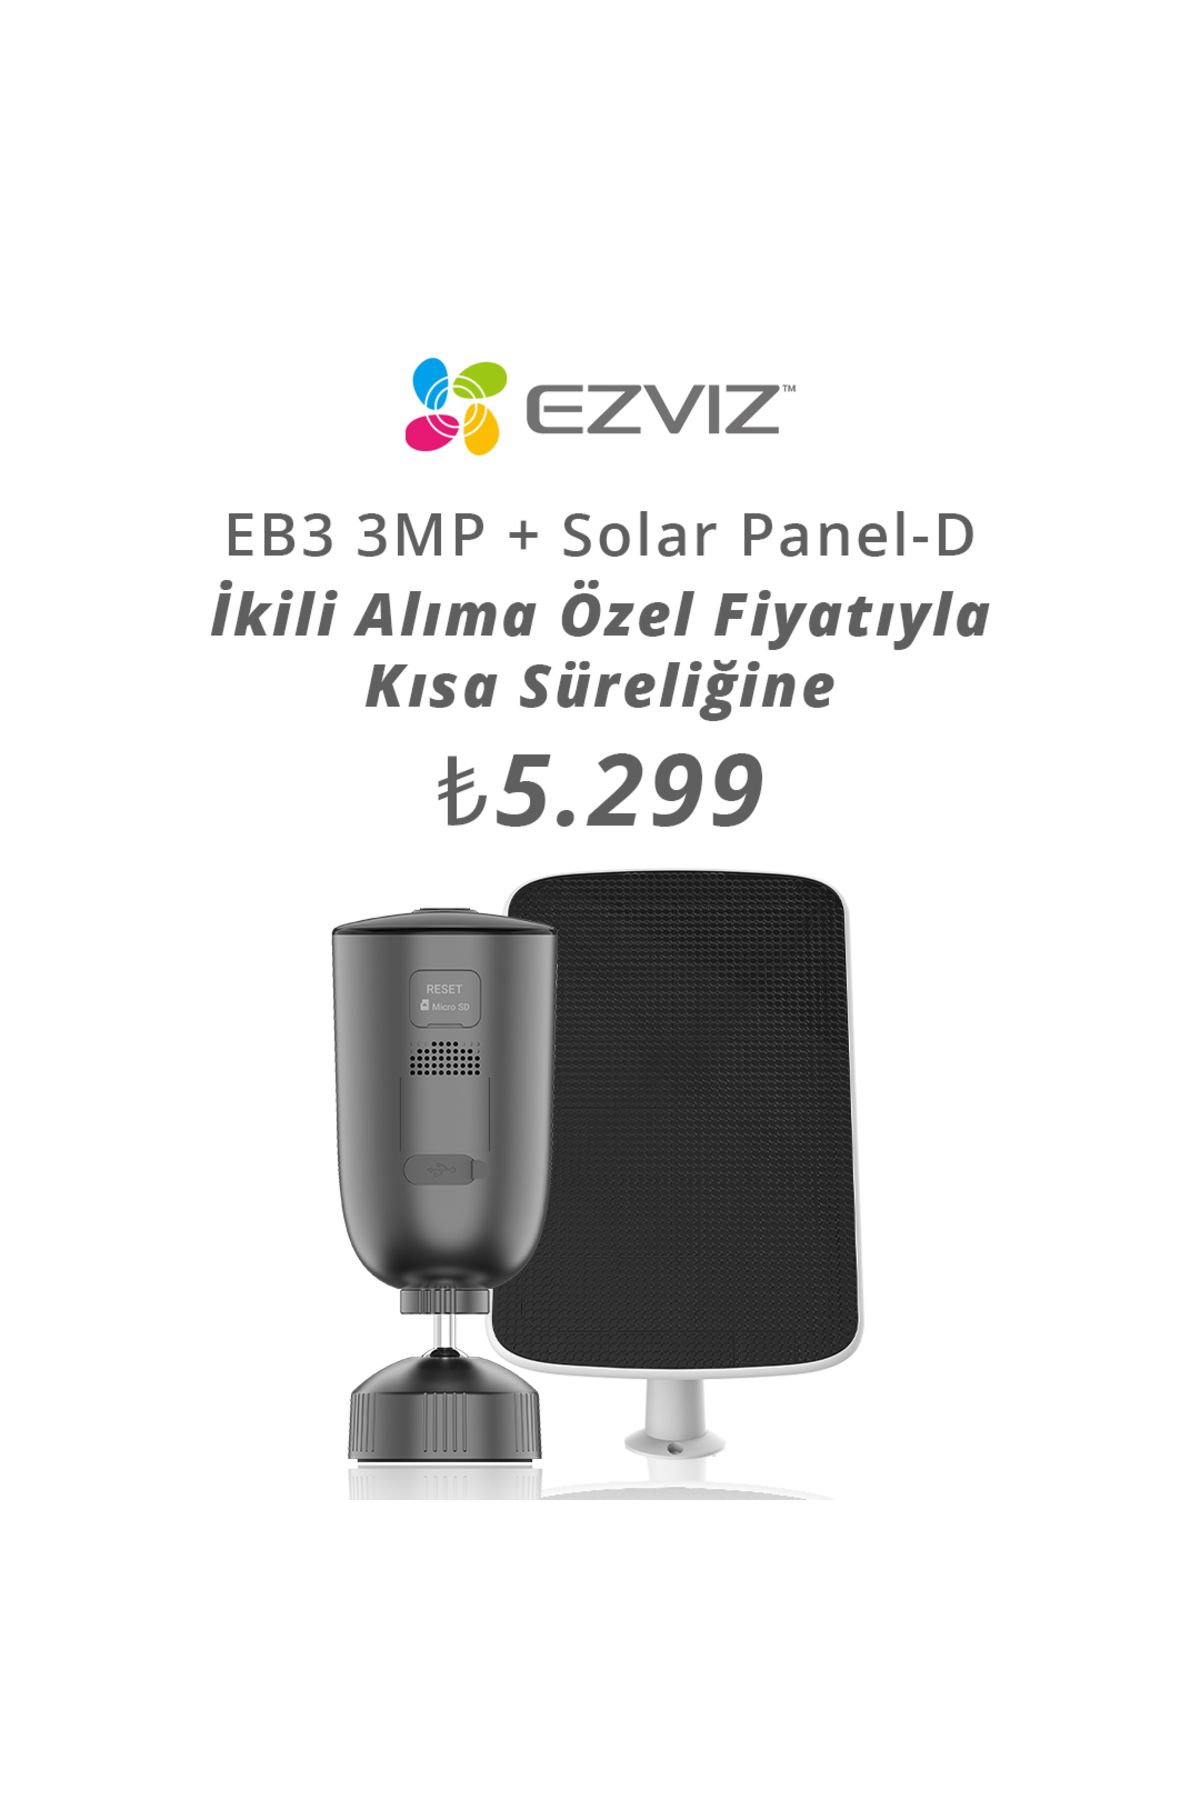 EZVIZ EB3 3MP + Solar Panel D Kit